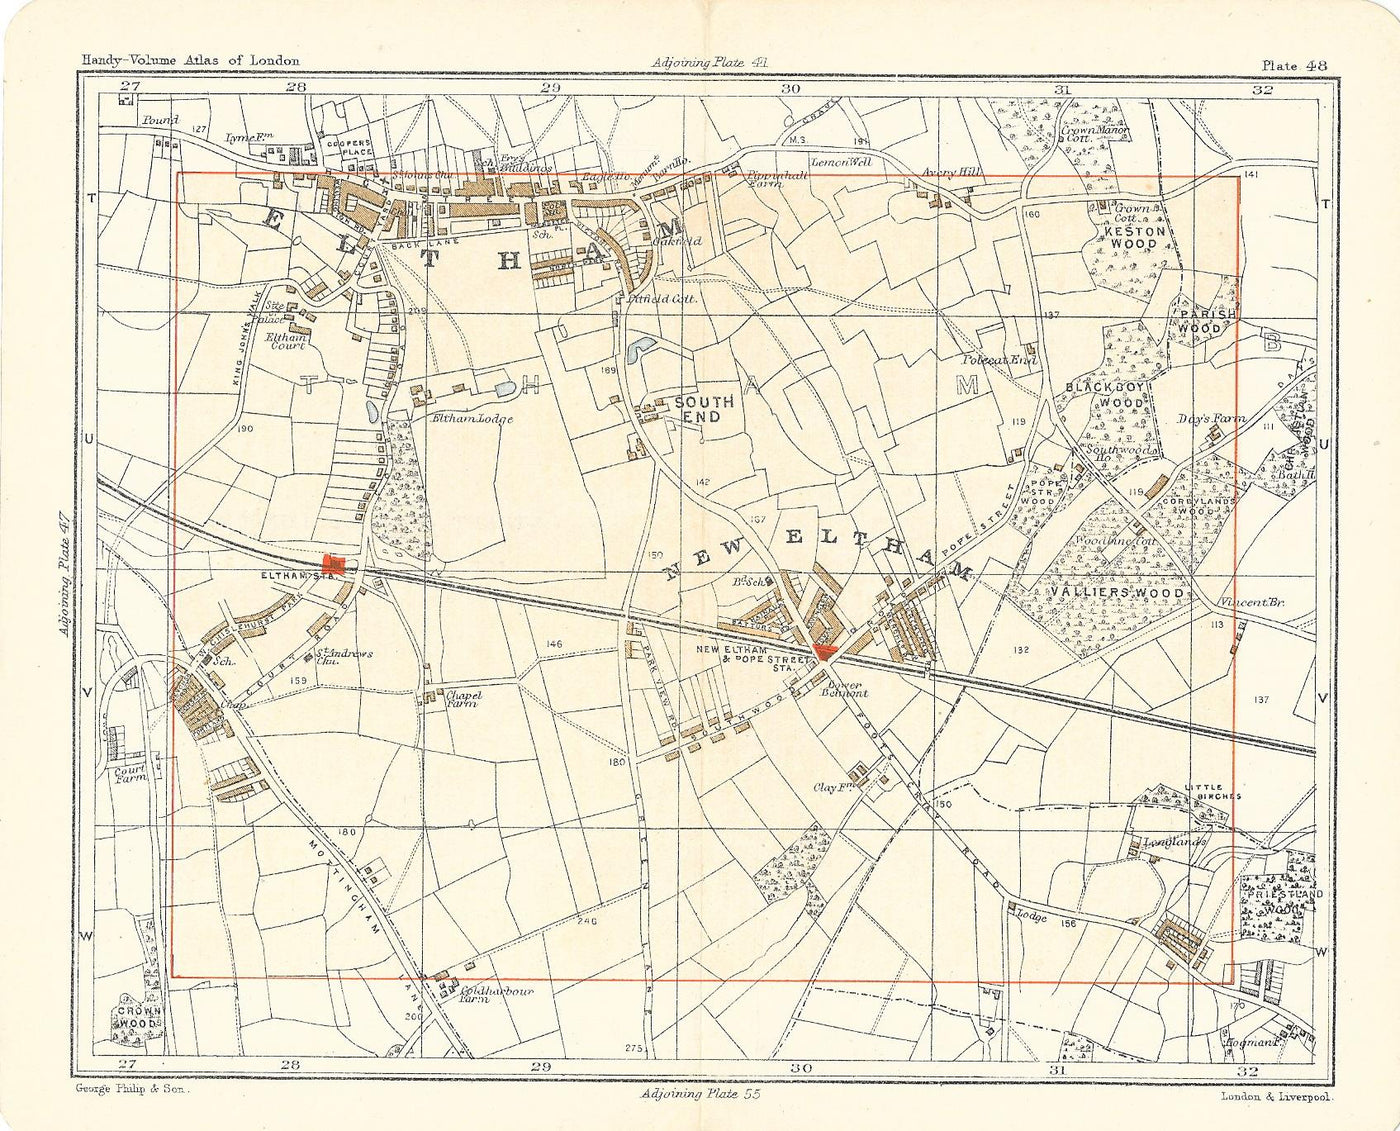 New Eltham antique map